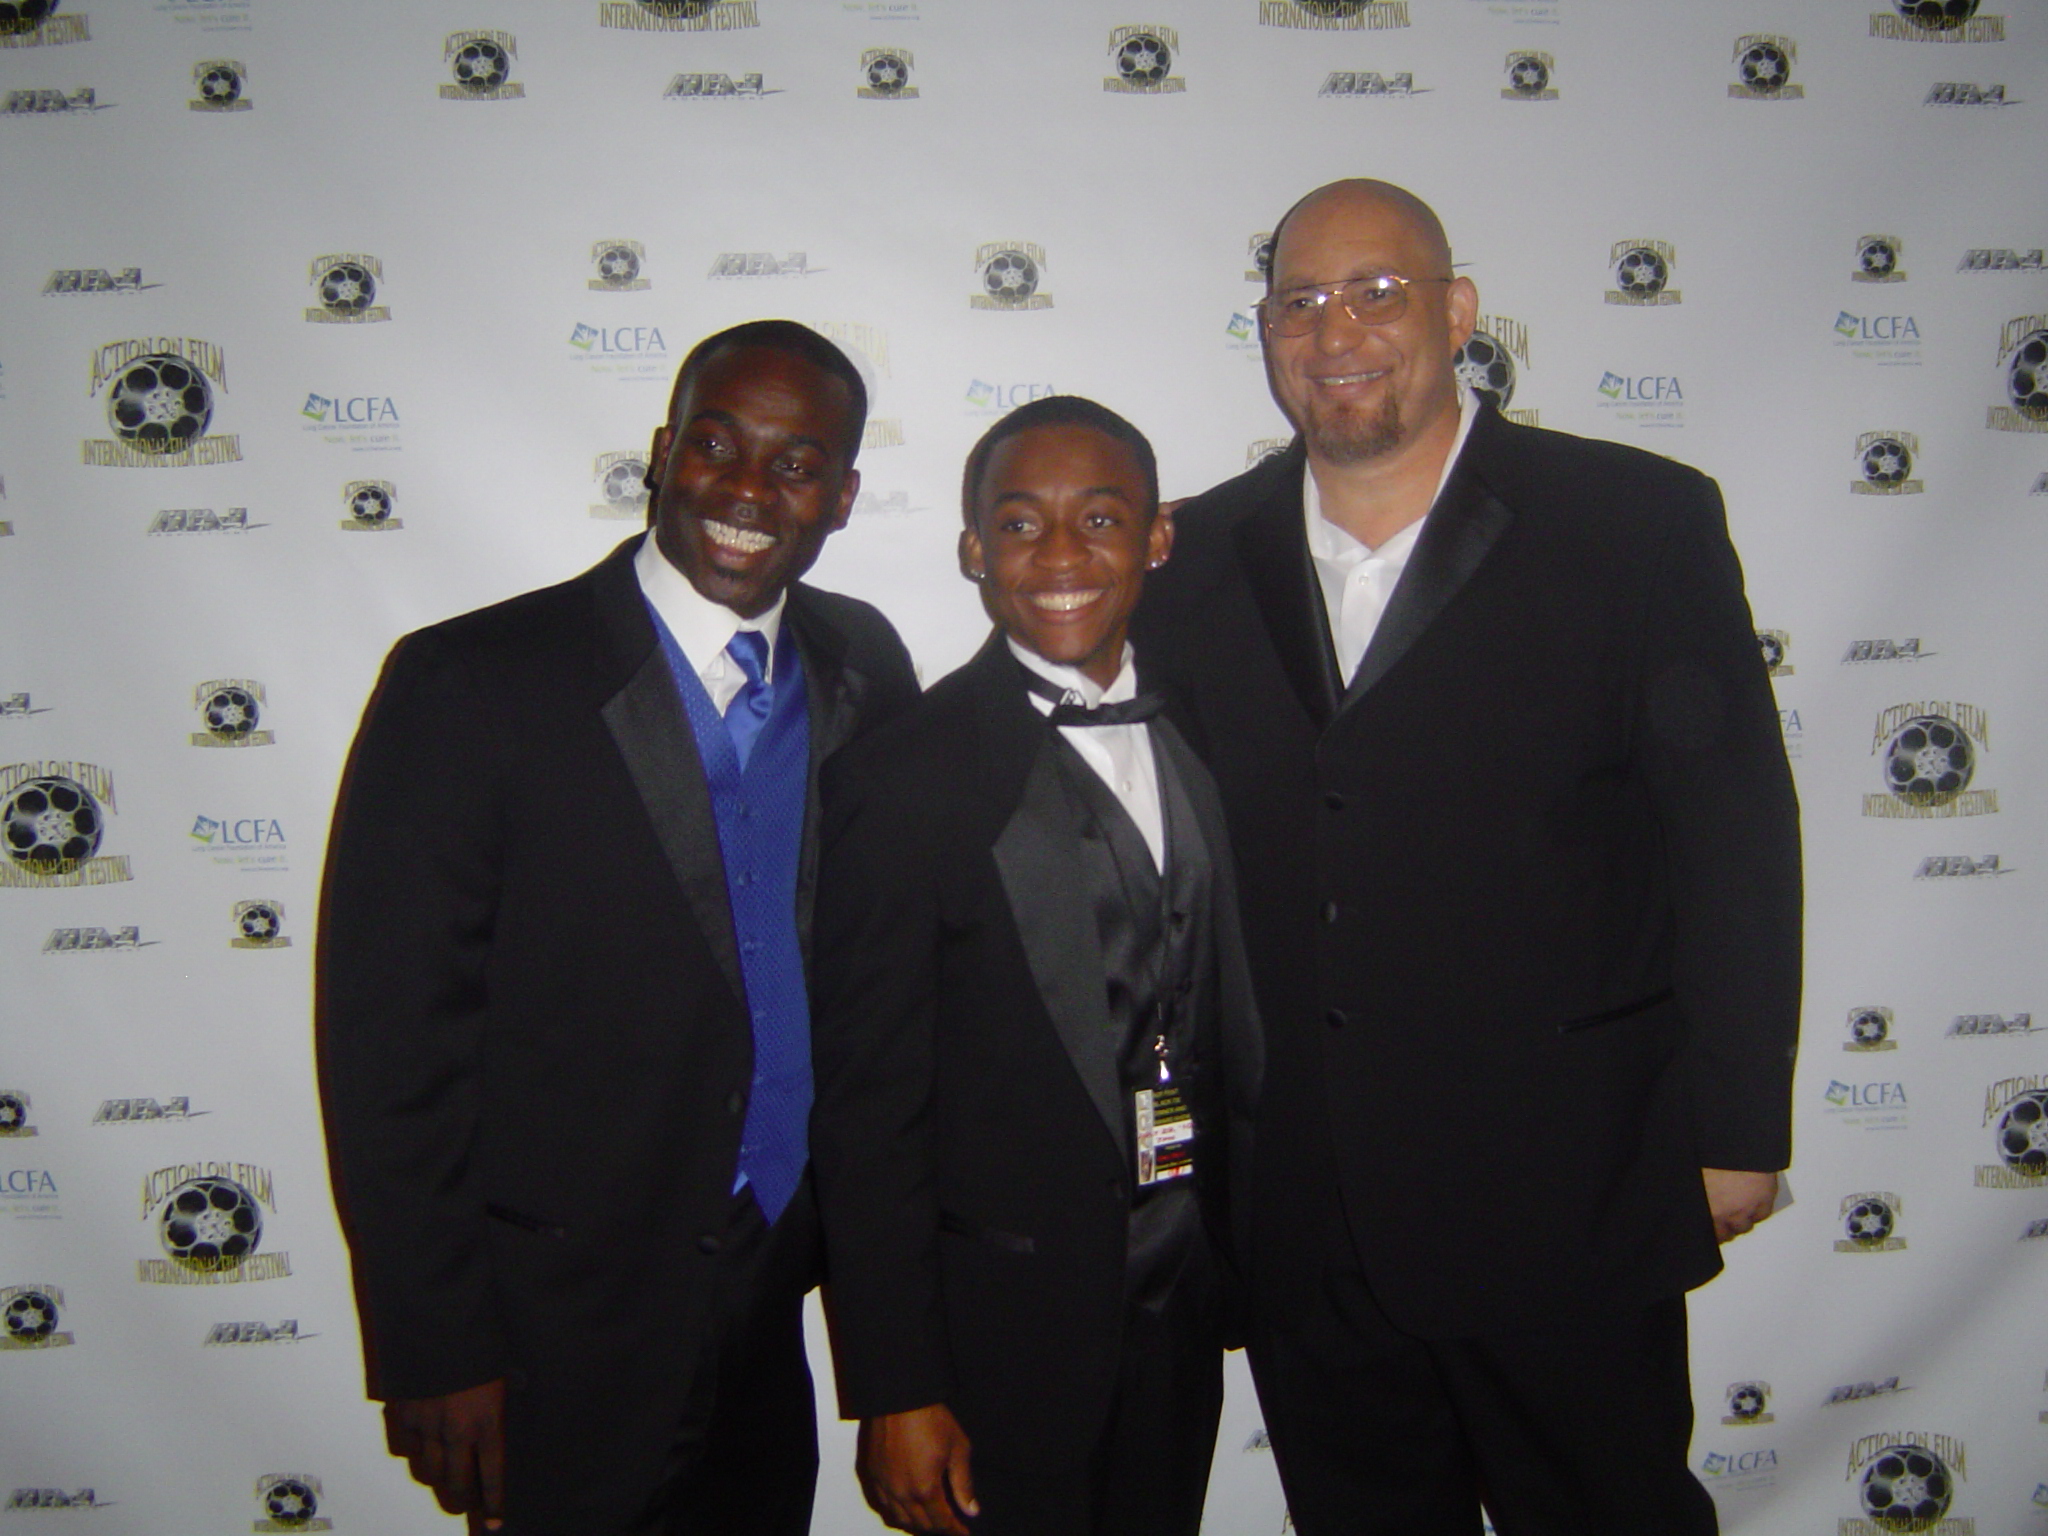 Emanuel Ward, Wilbert Berthaud jr, Del Weston at AOF Awards 2010